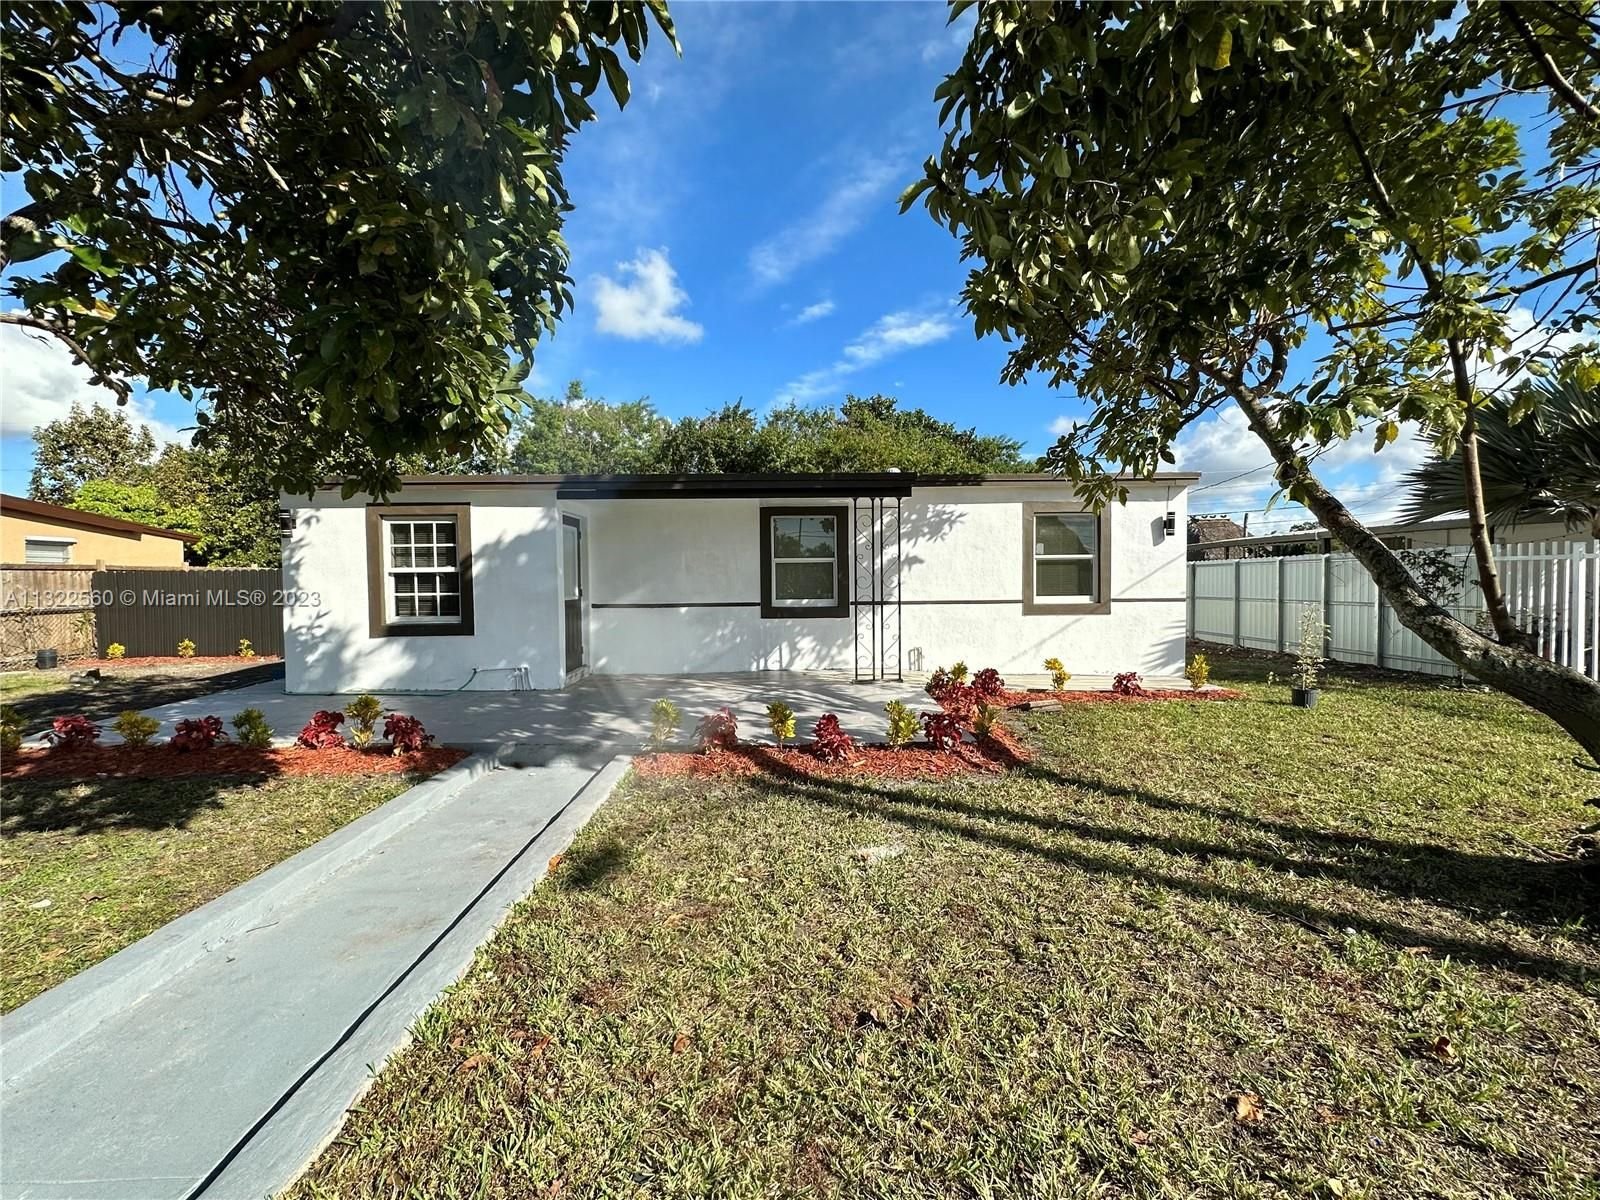 Real estate property located at 4121 113th Ct, Miami-Dade County, Miami, FL